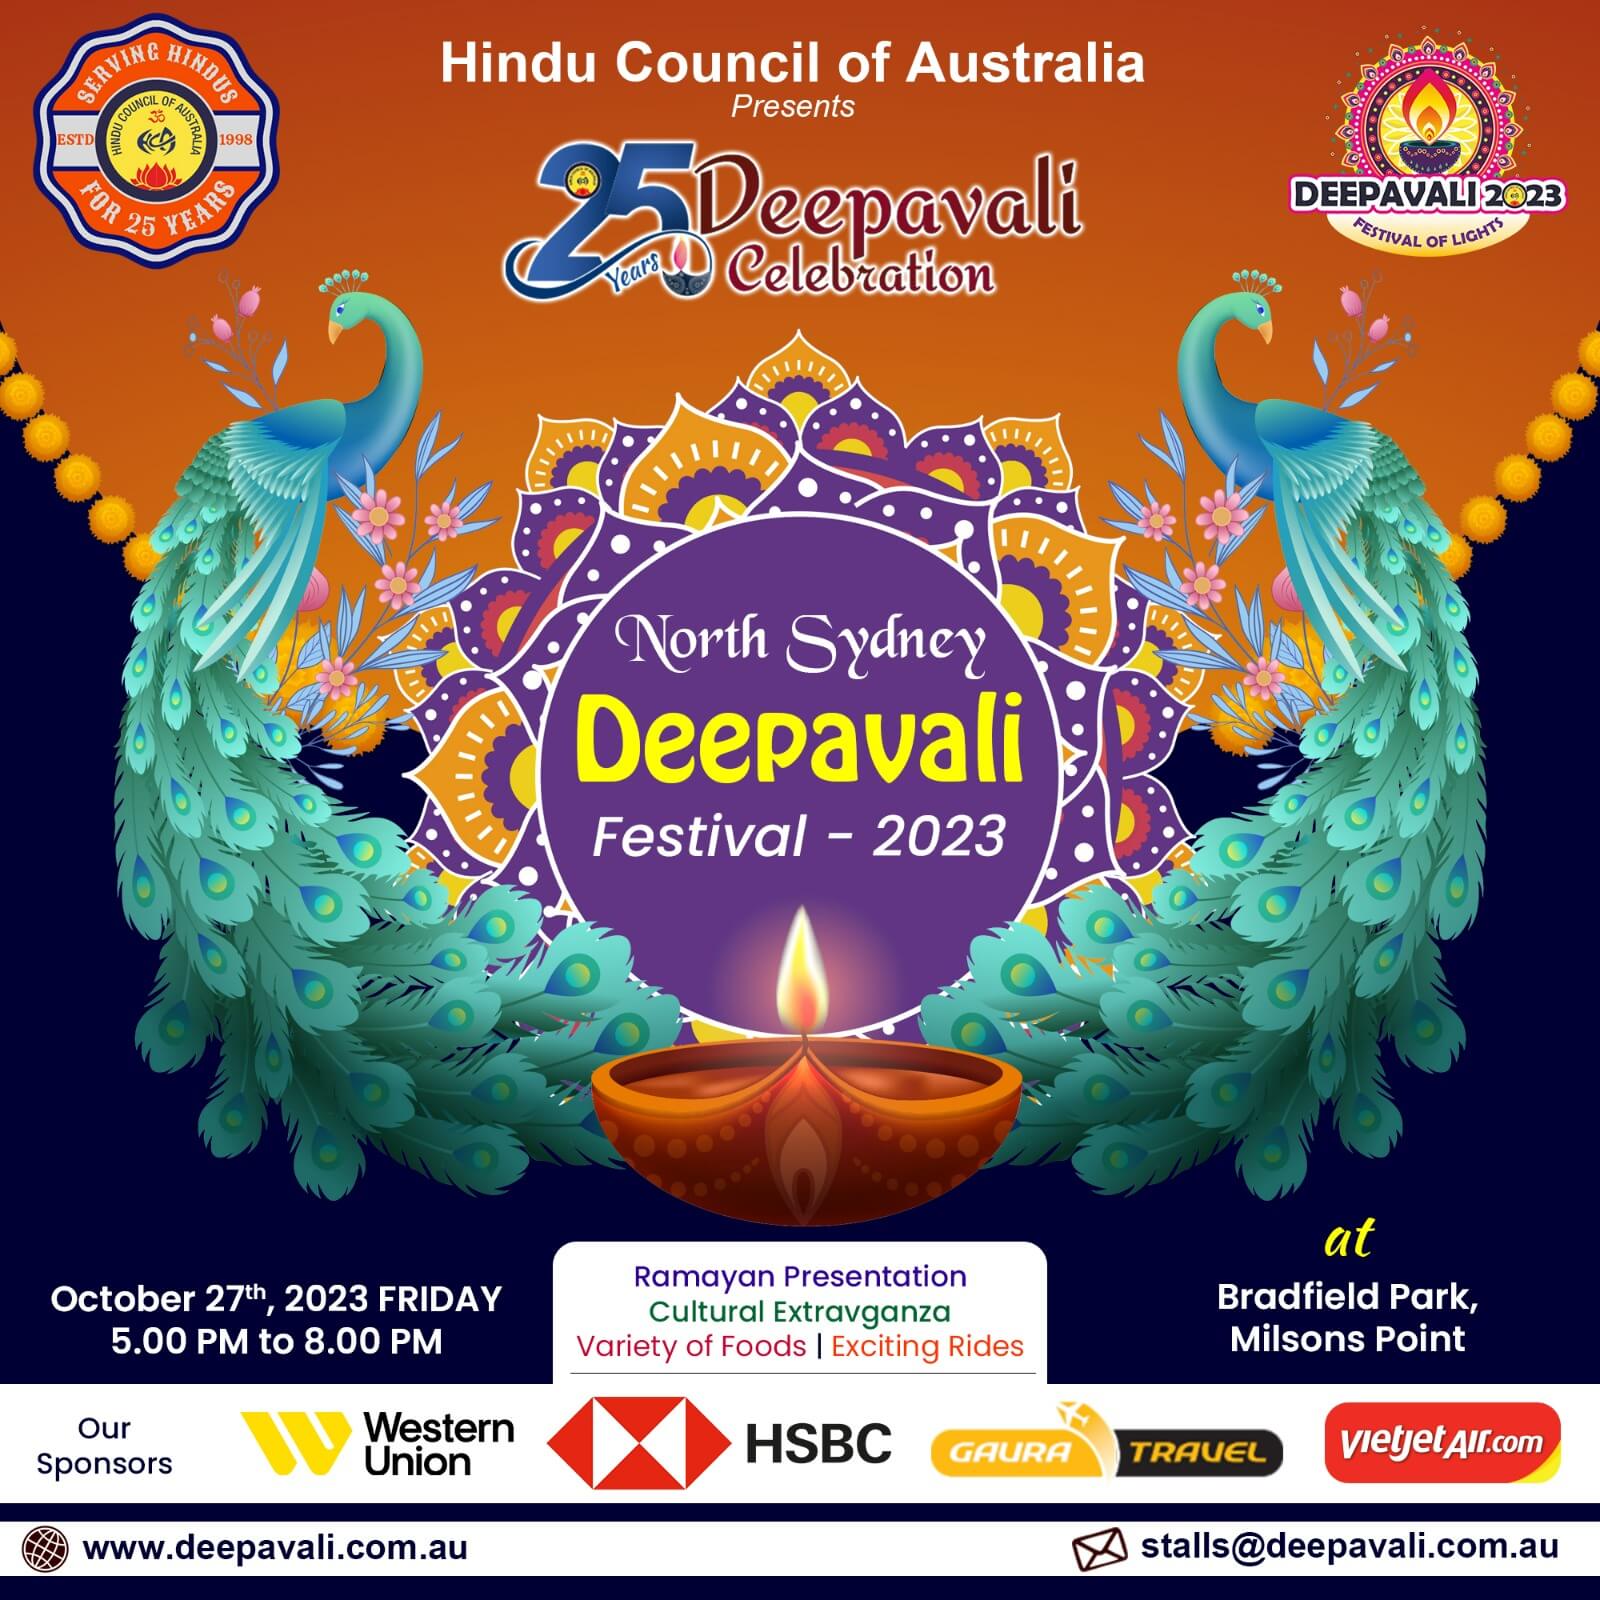 North Sydney Deepavali Festival – 2023